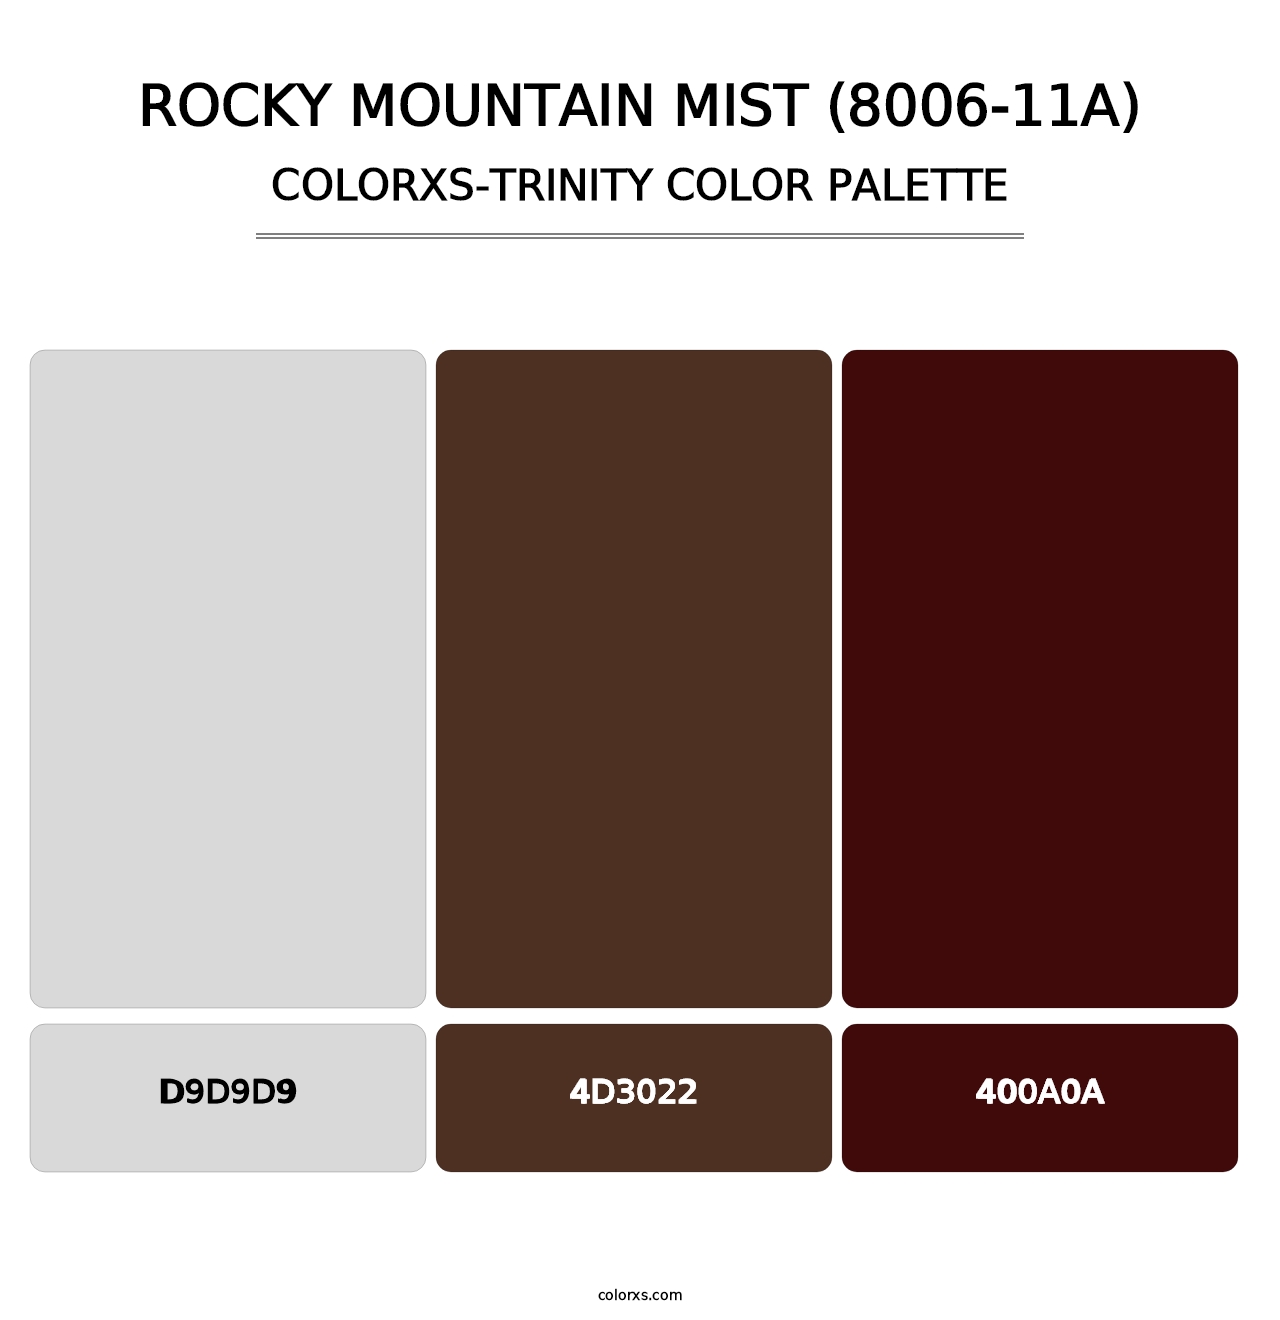 Rocky Mountain Mist (8006-11A) - Colorxs Trinity Palette